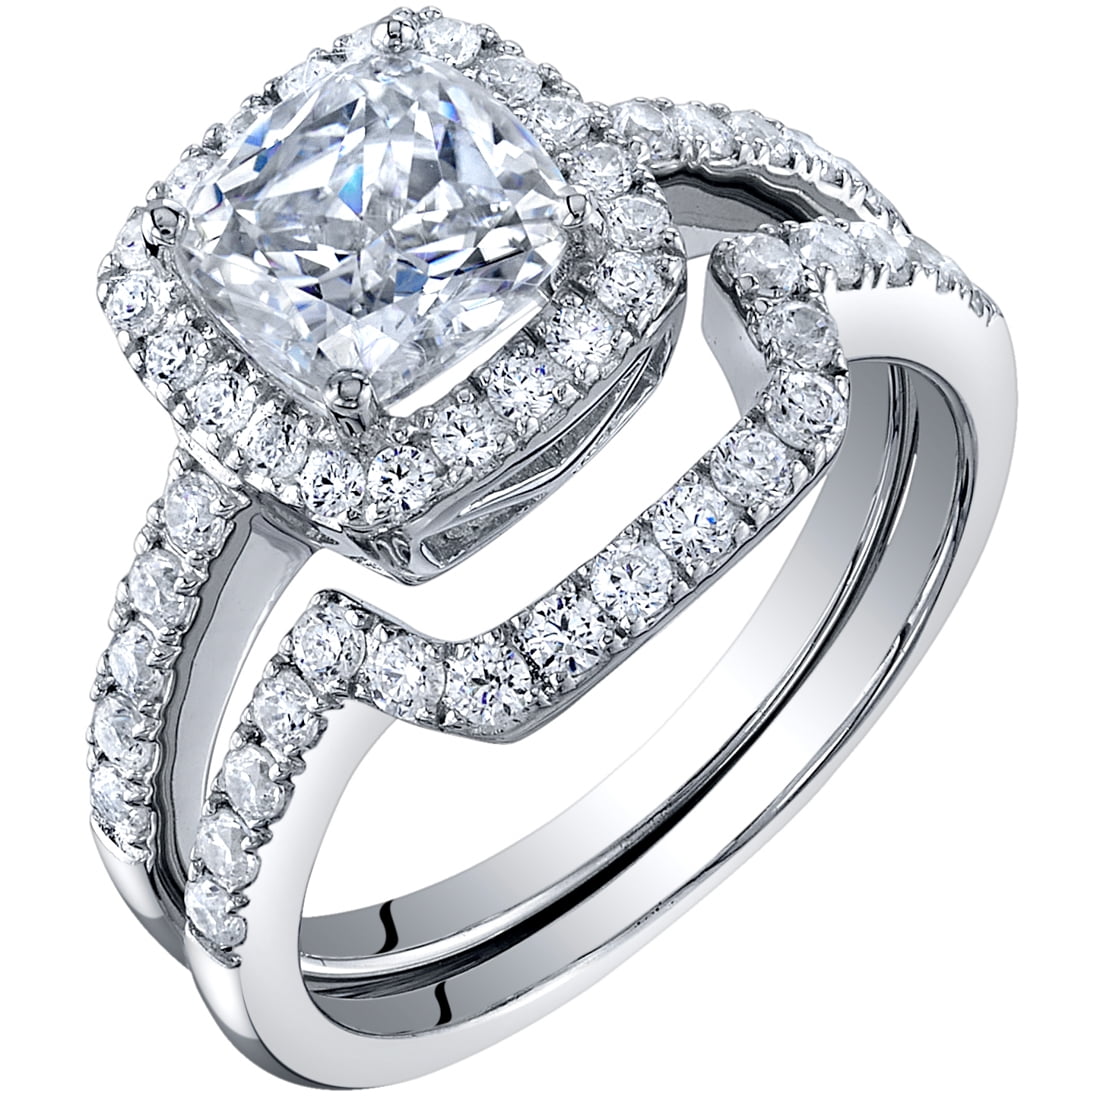 INTRICATE 4 CT Princess Cut Cubic Zirconia Bridal Engagement Wedding Ring SIZE 7 